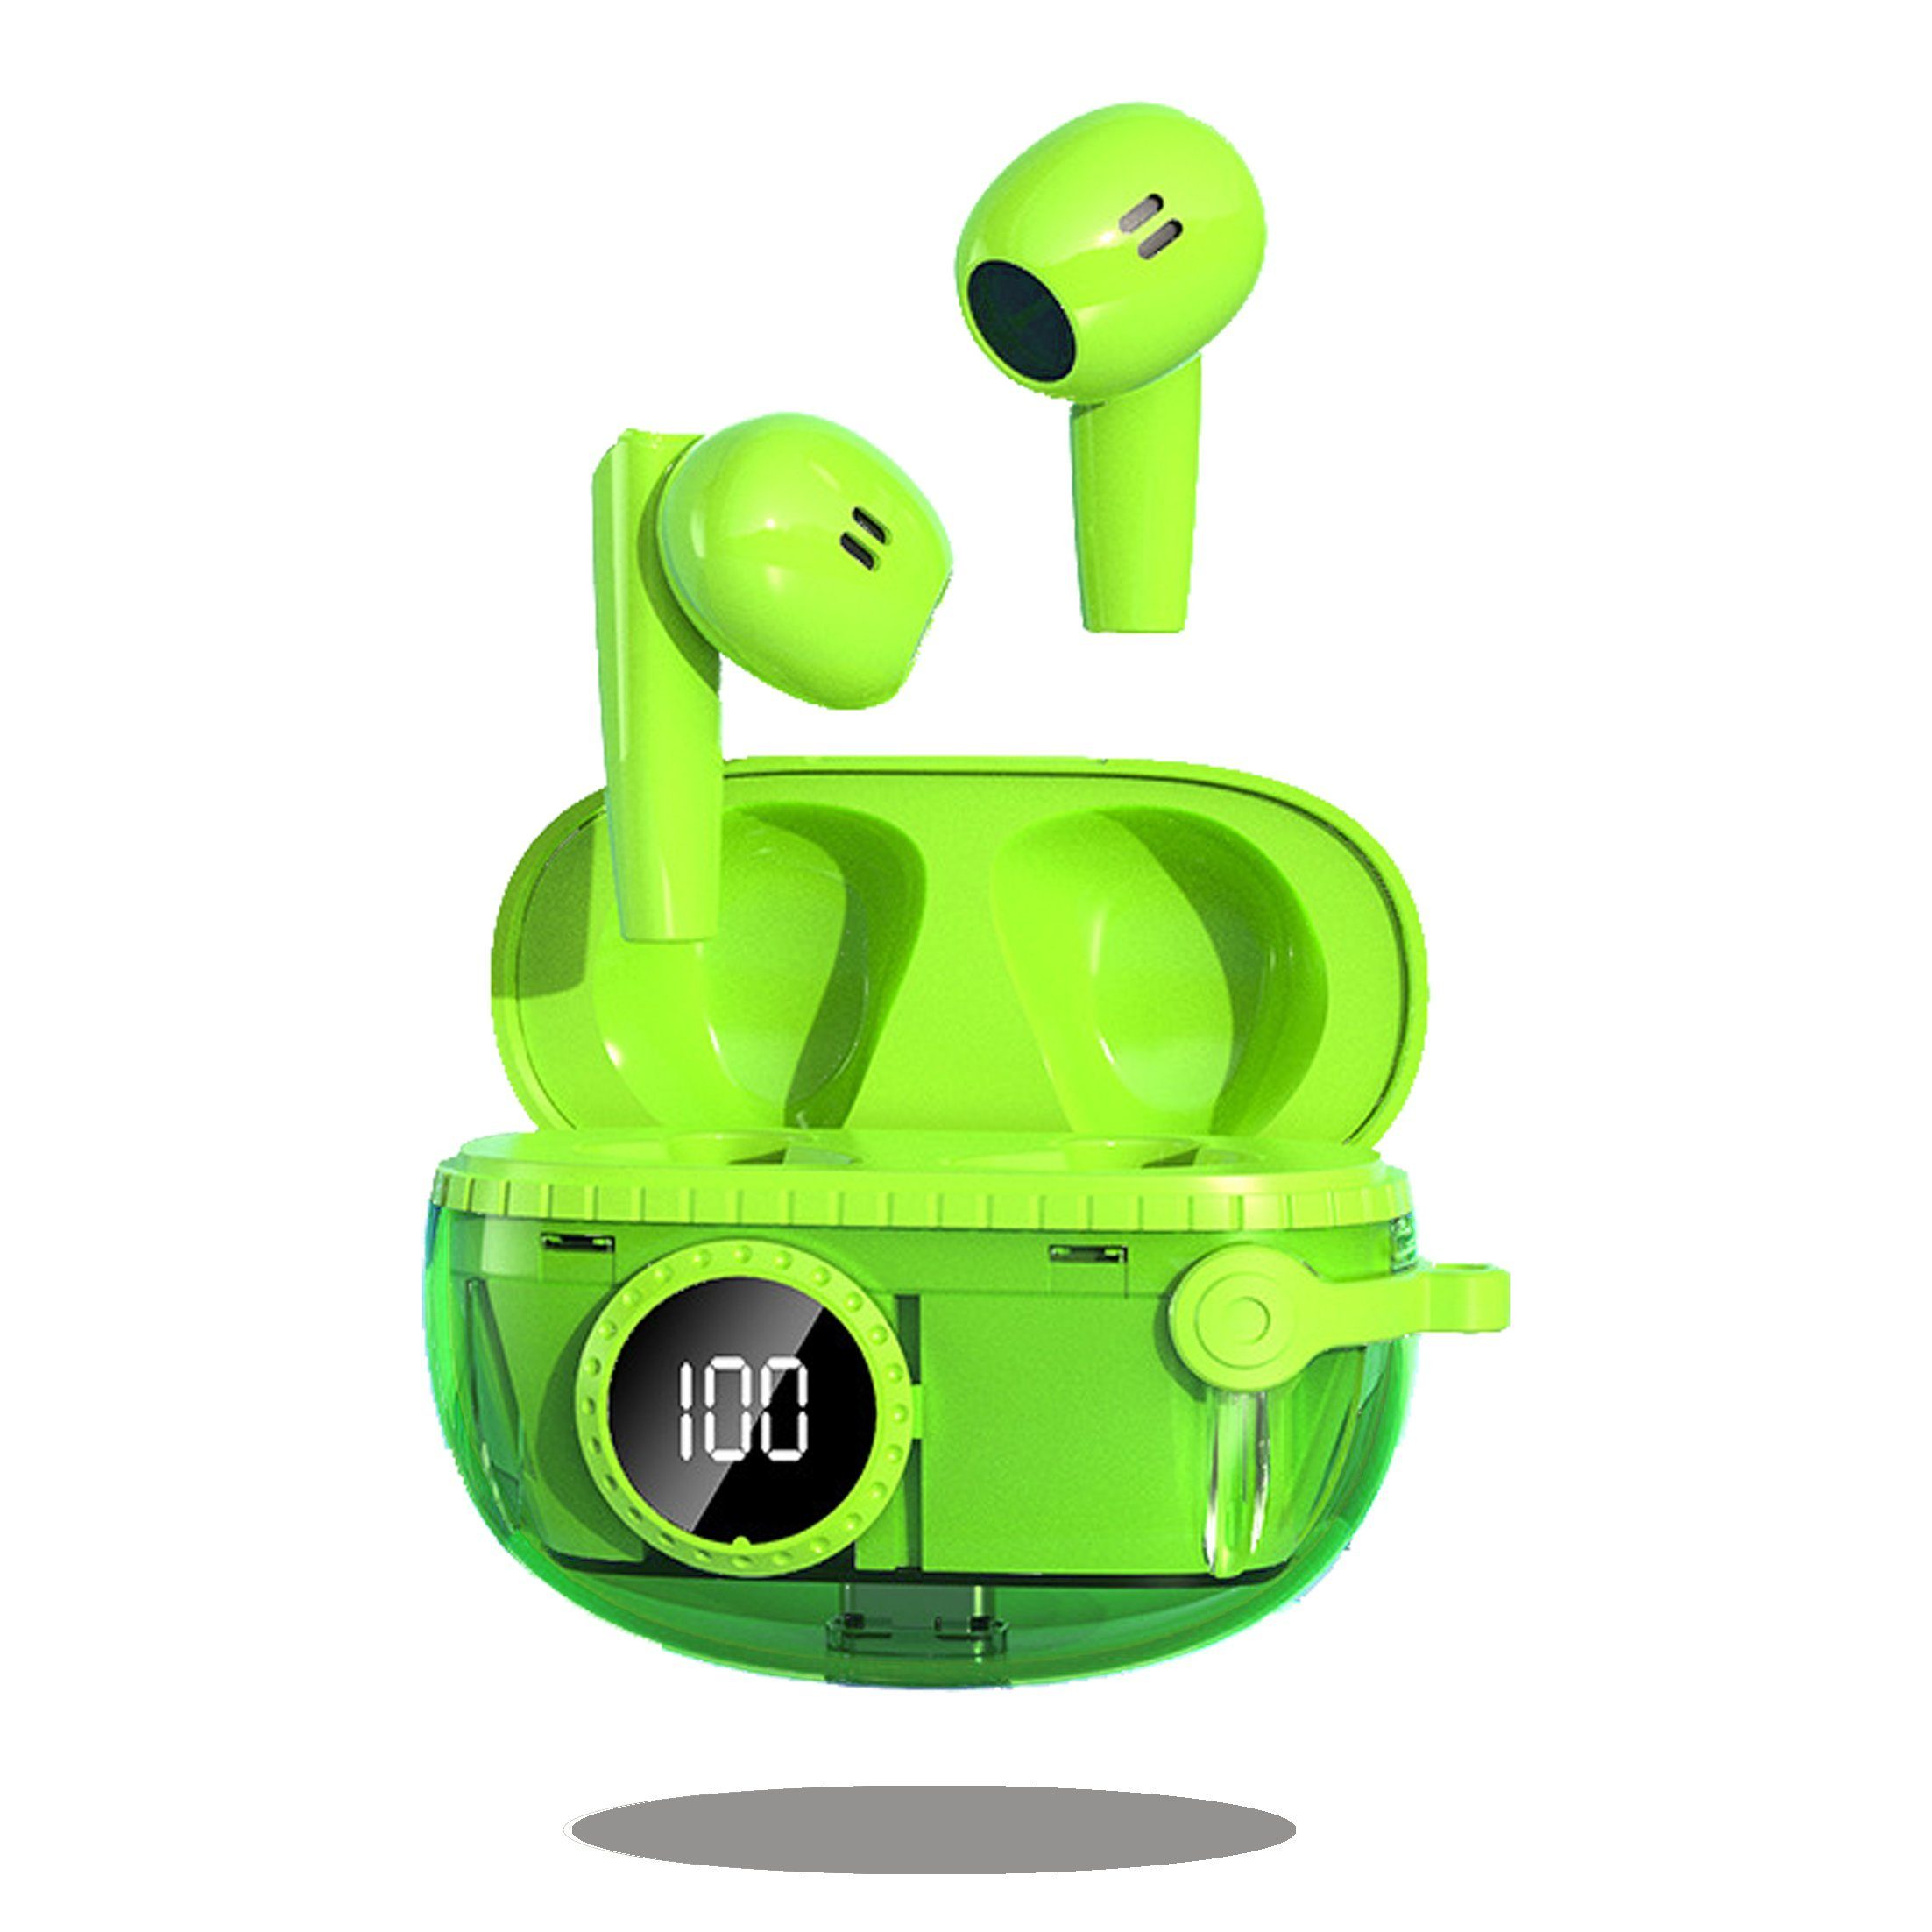 Diida grün Geräuschunterdrückung,Smart Funk-Kopfhörer mit Kopfhörer,In-Ear-Bluetooth-Kopfhörer